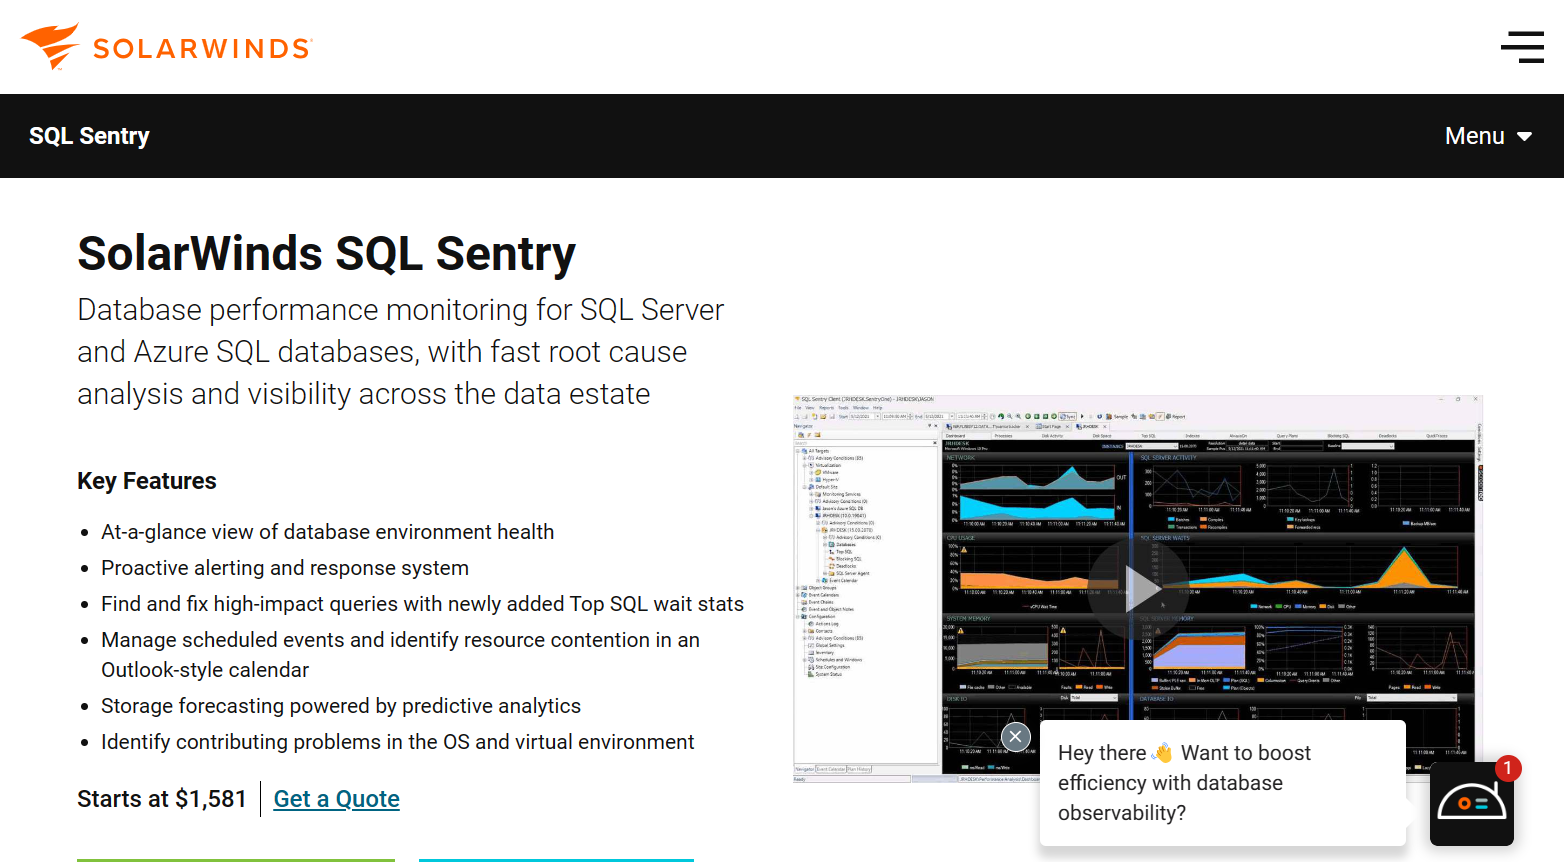 solarwinds.com – SolarWinds SQL Sentry